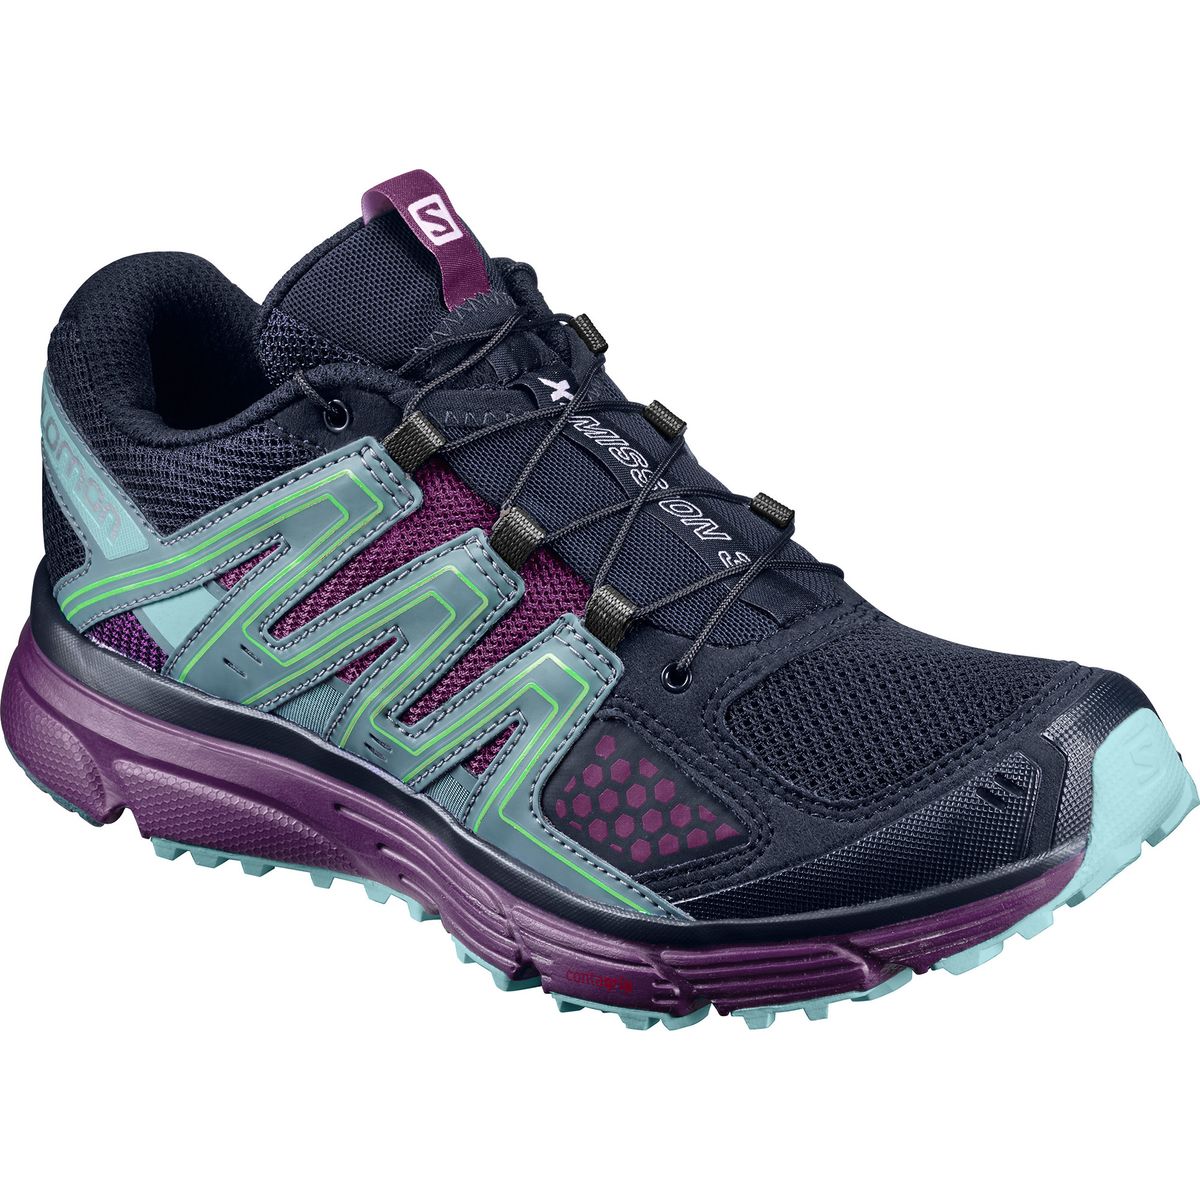 Salomon X-Mission 3 Trail Running Shoe - Women's | eBay